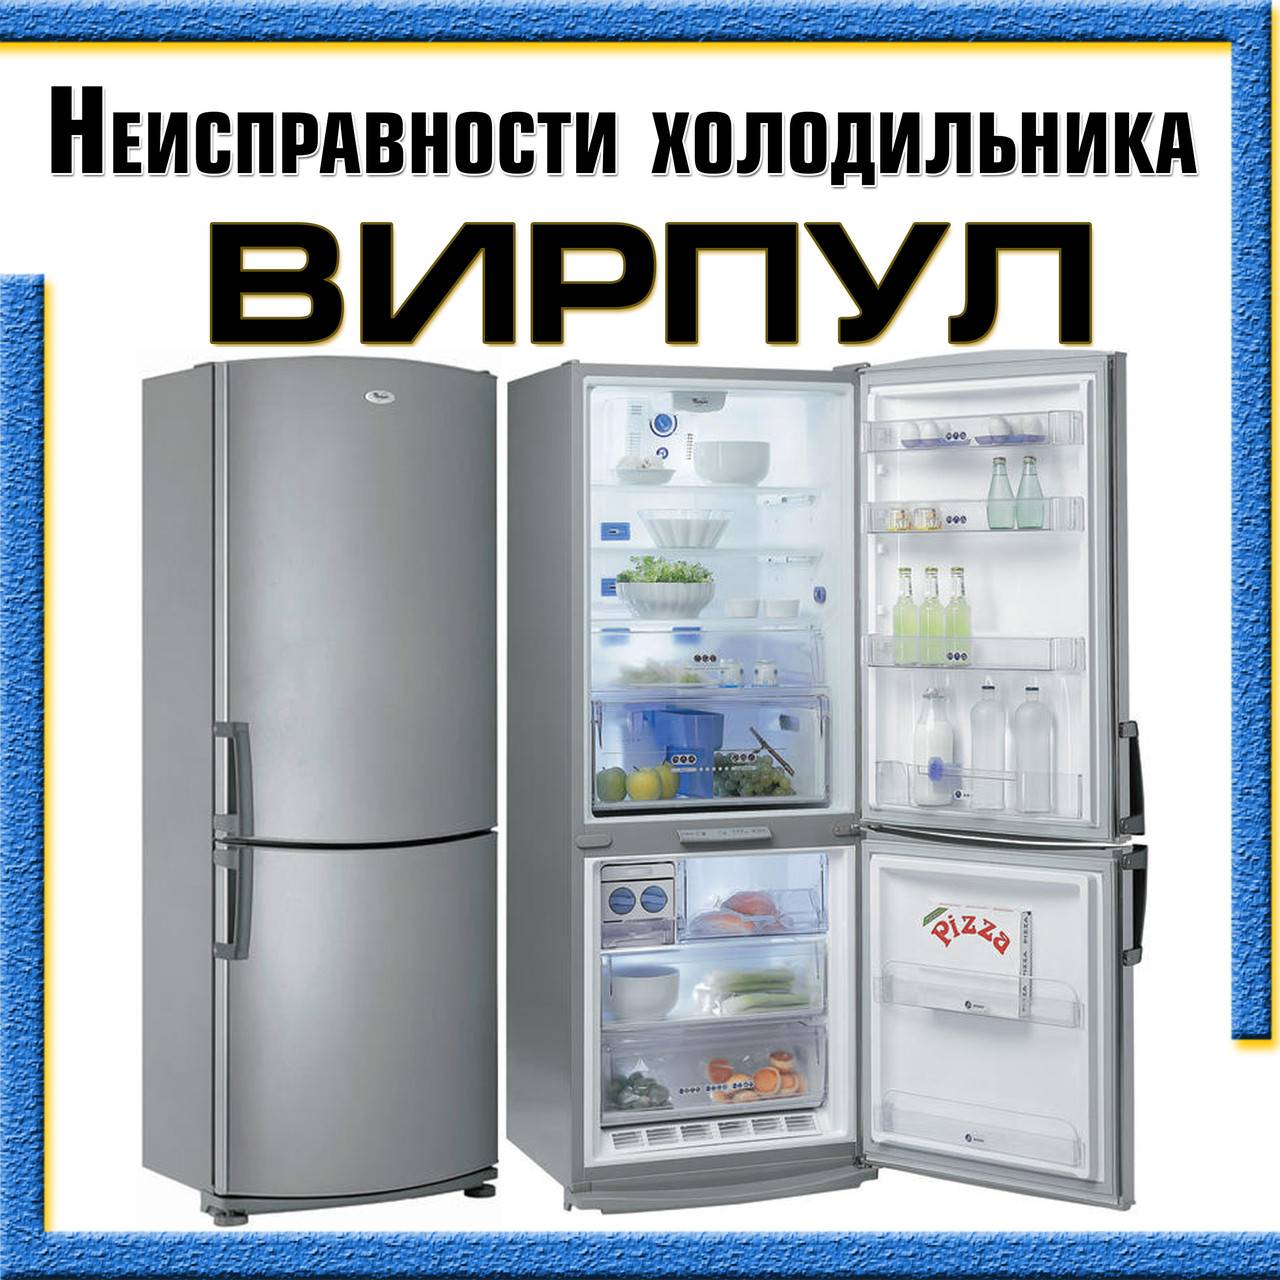 Неисправности холодильника